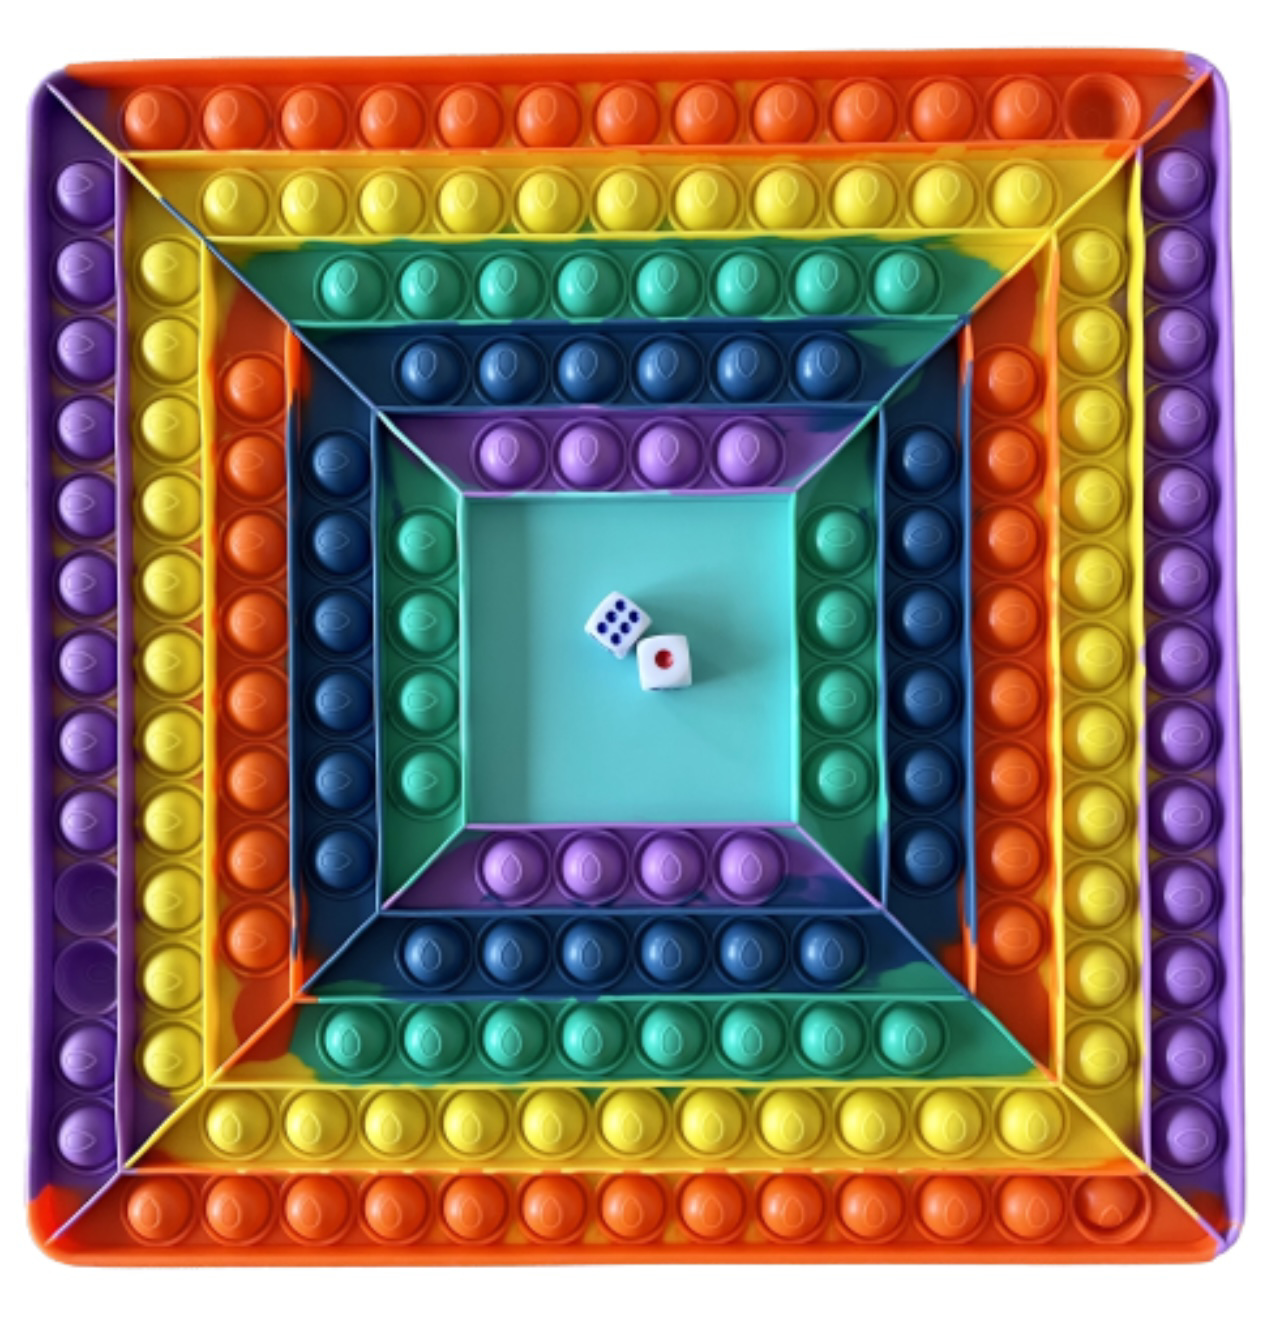 Desková hra POP IT rainbow s kostkami - čtverec